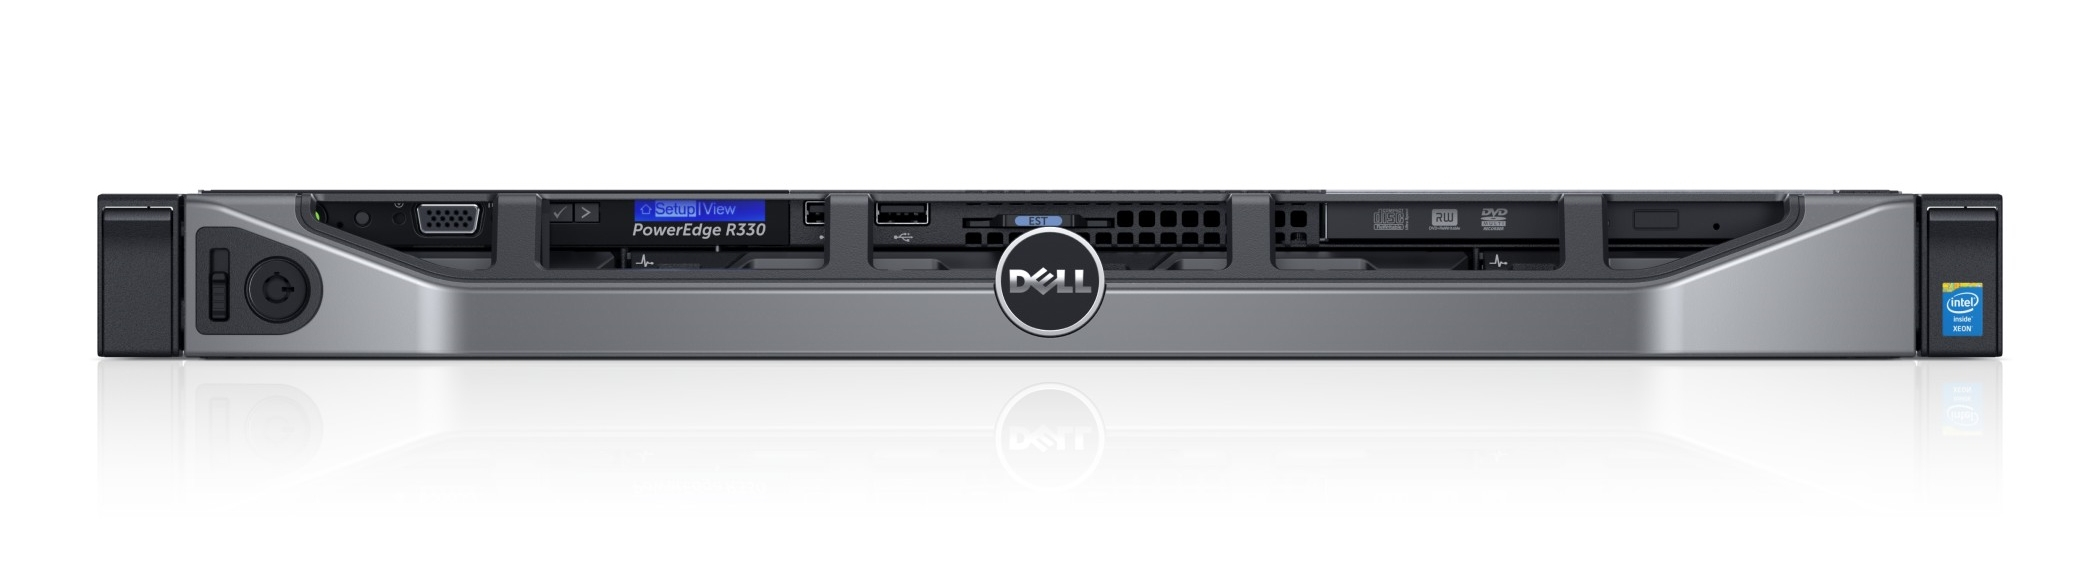 Servidor Dell R330 Xeon E3 1230V6 8Gb Ddr4 1Tb 2.5” Rack 1U Dxhf9